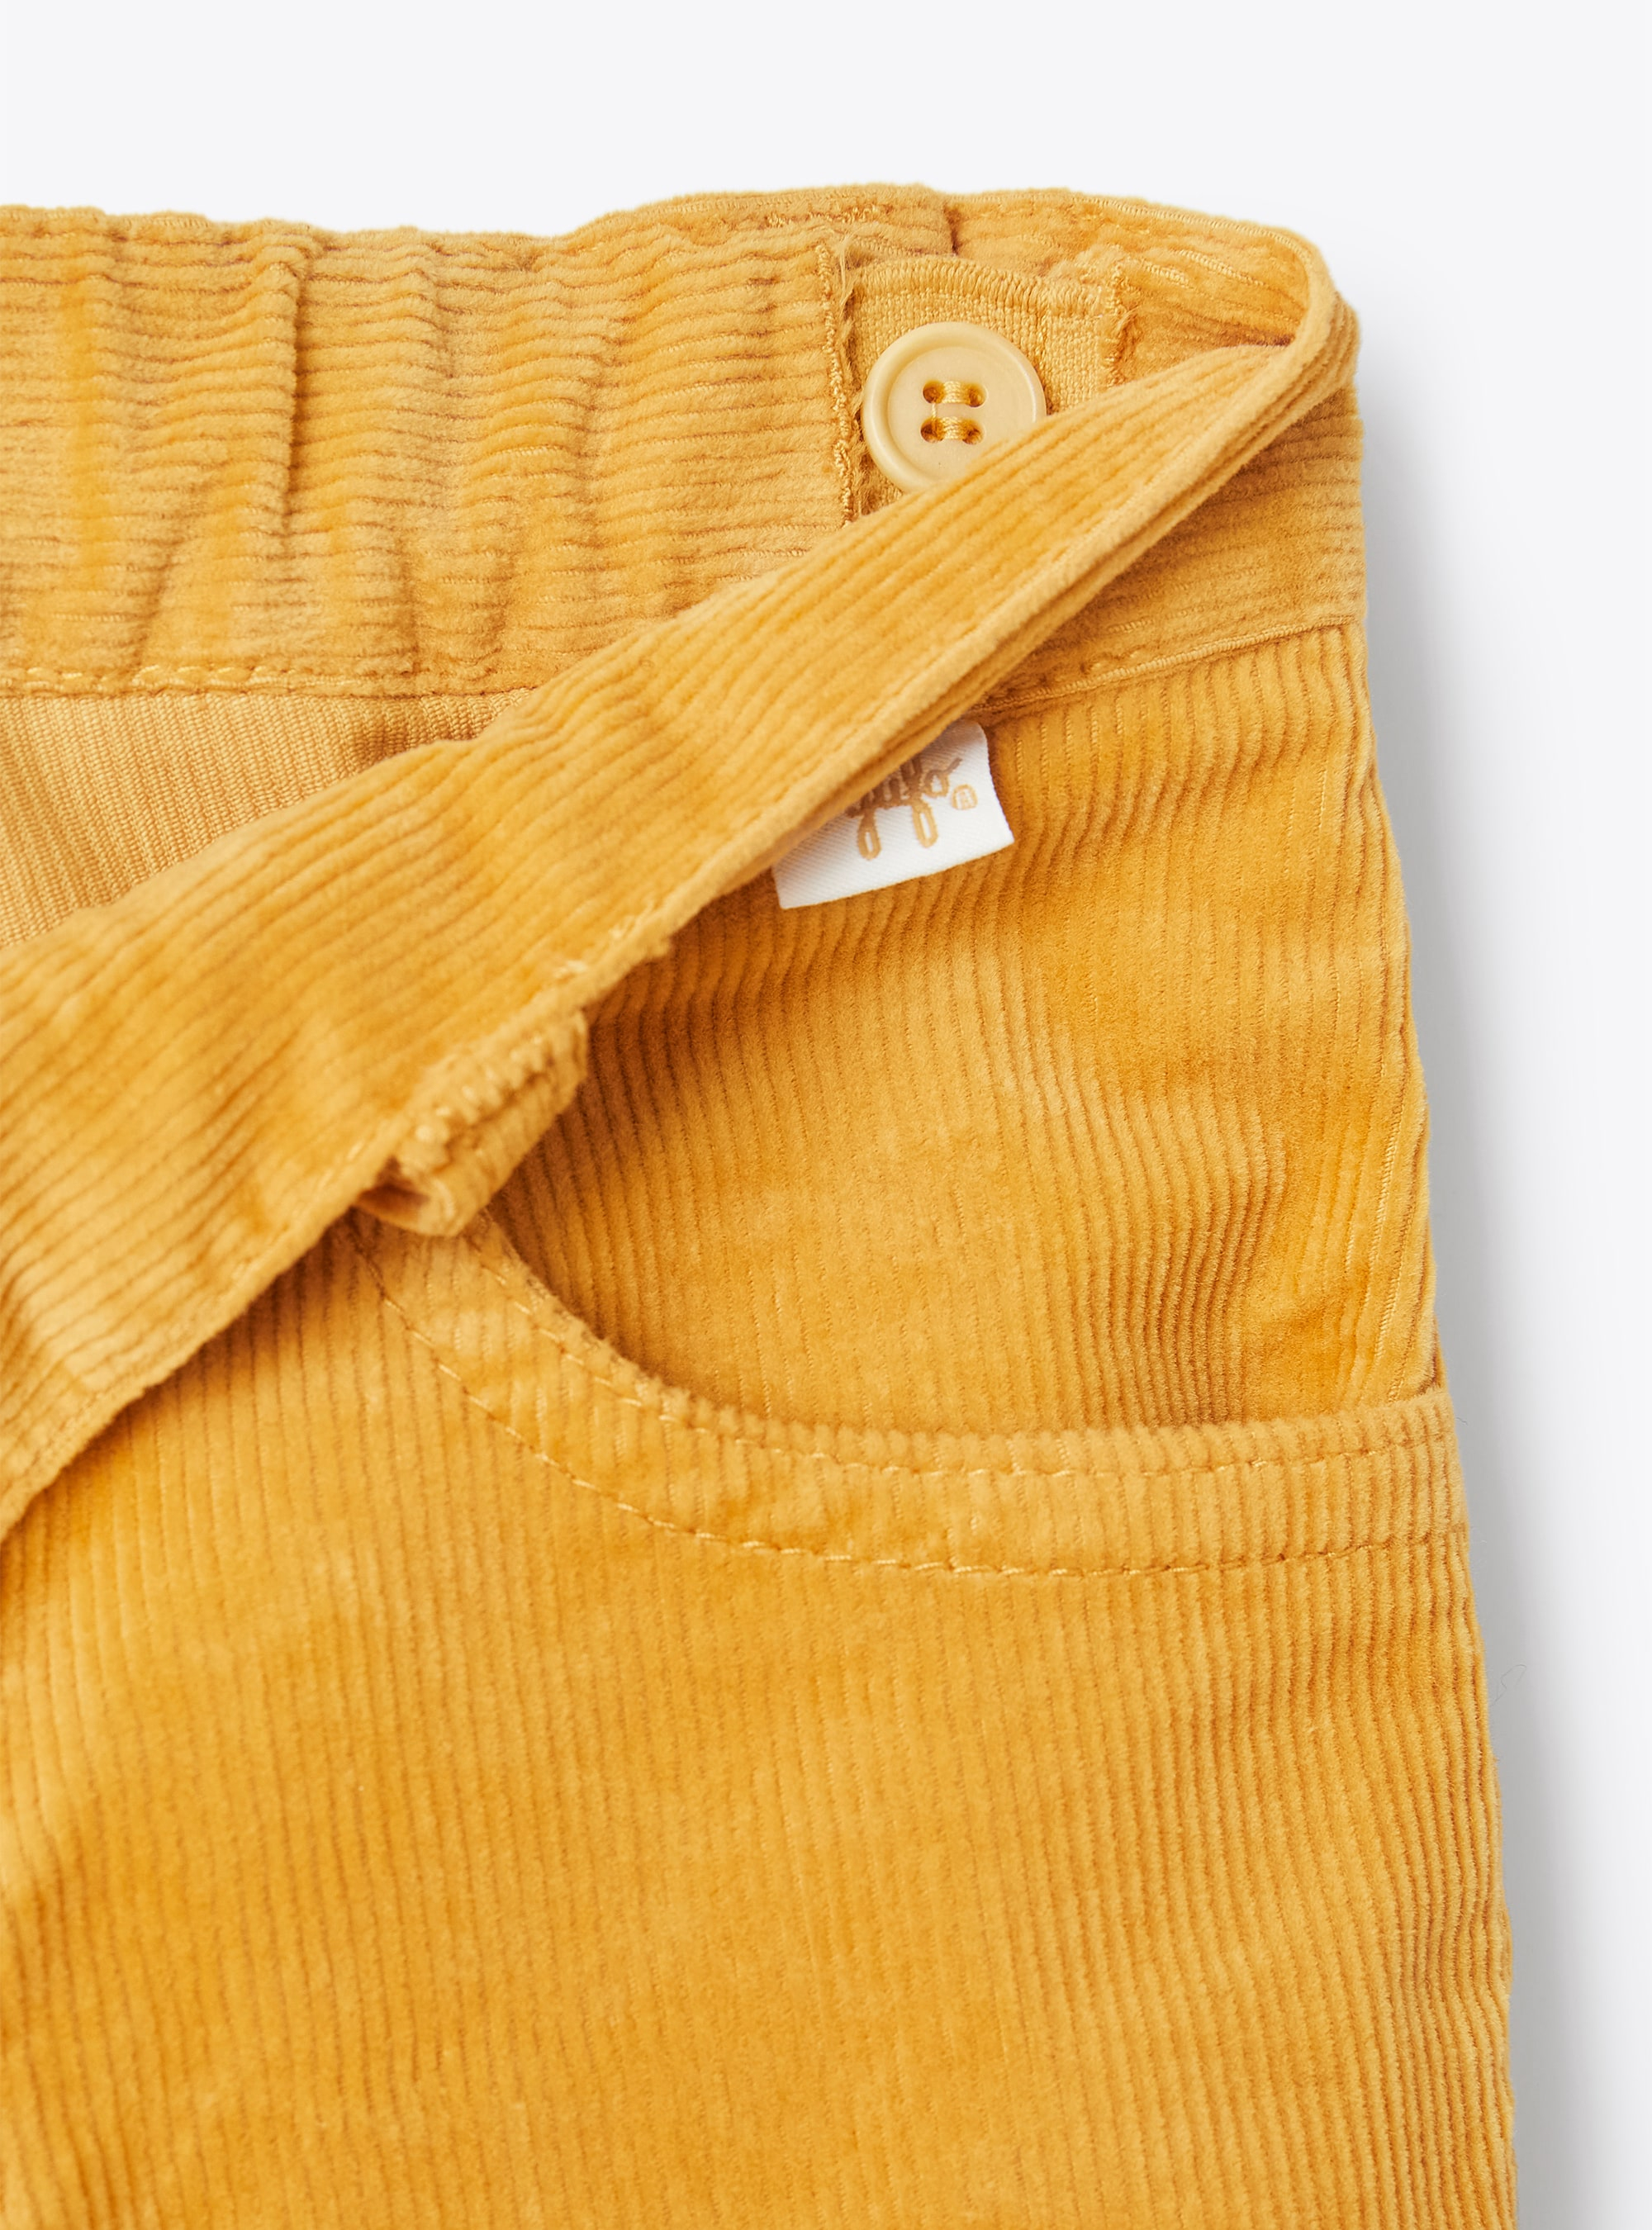 Regular fit yellow corduroy trousers - Beige | Il Gufo